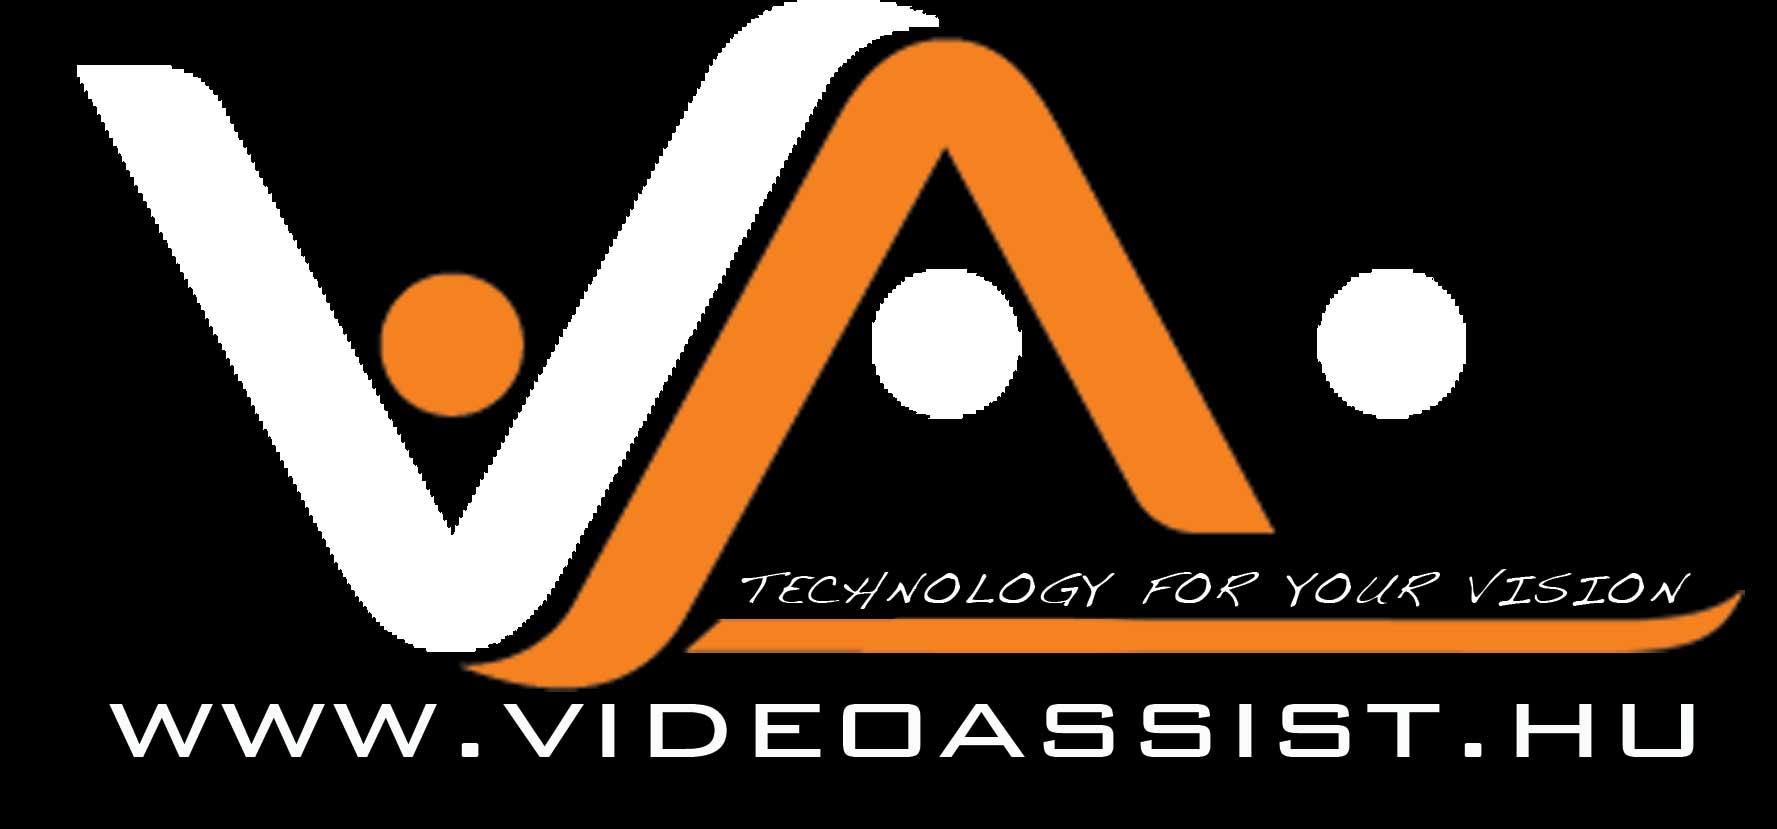 Videoassist logo